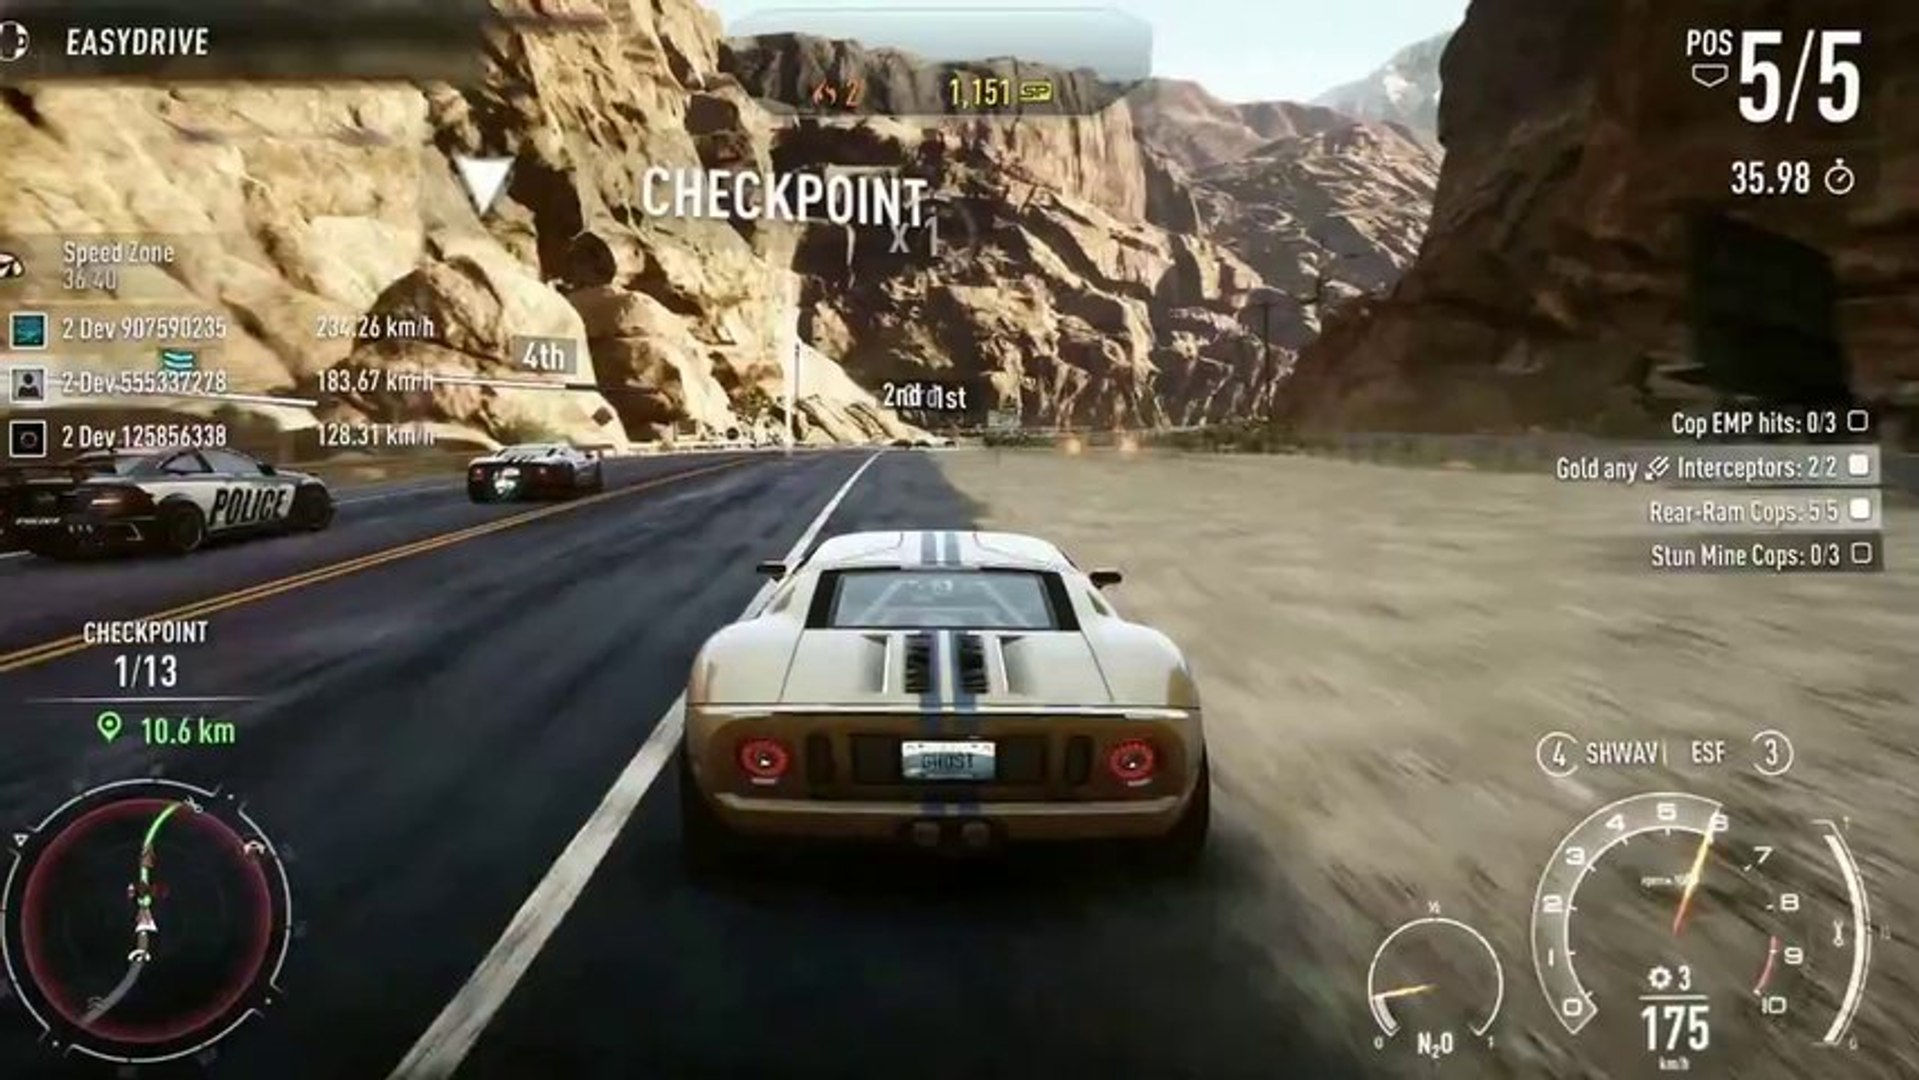 Need for Speed Rivals - Koenigsegg One:1 Gameplay Trailer